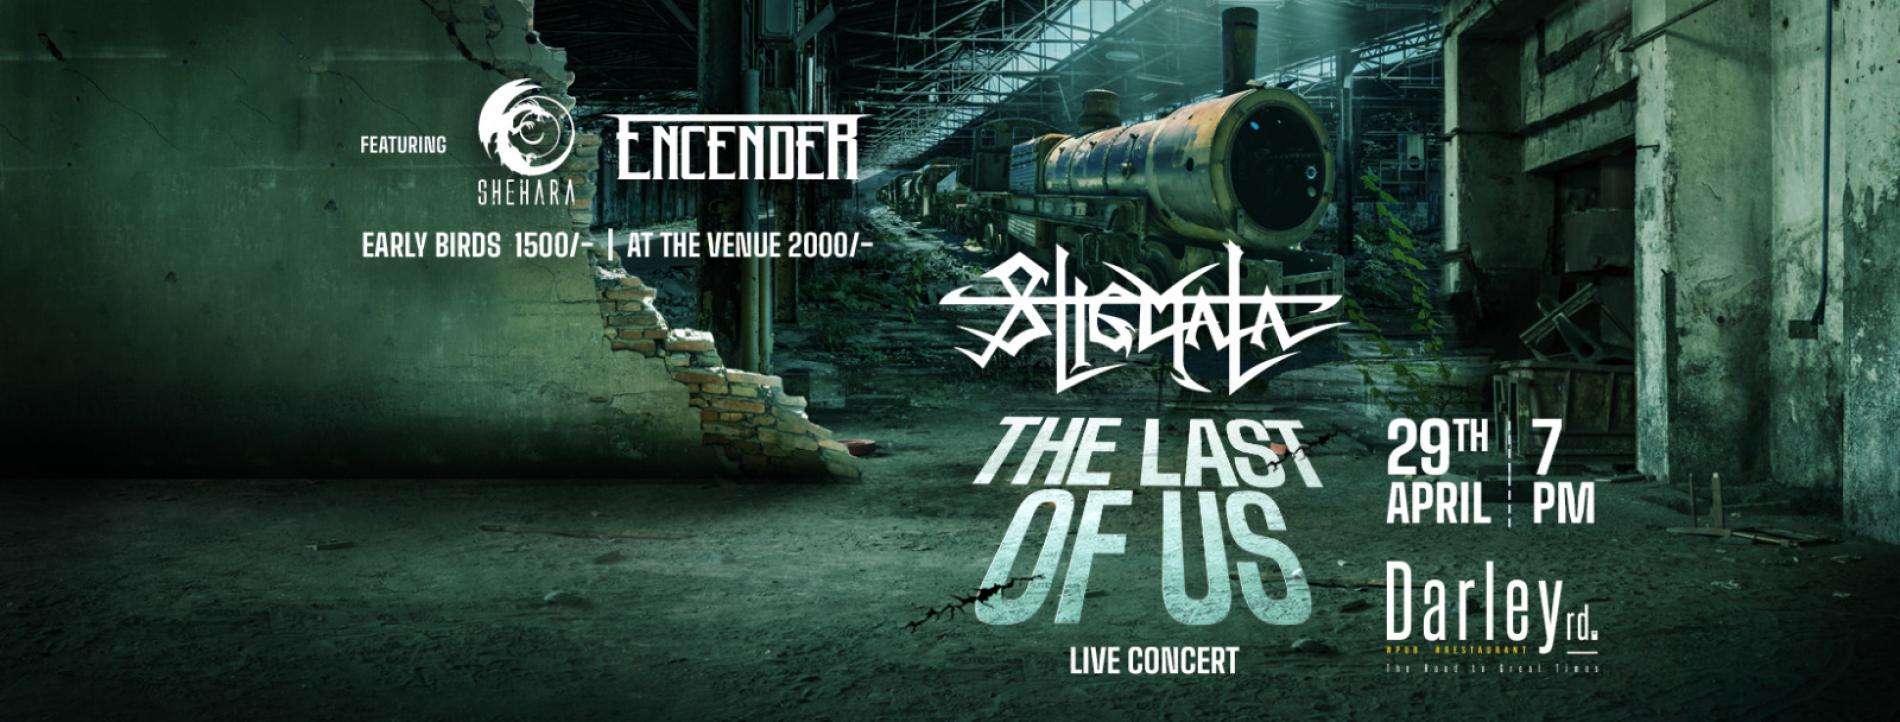 Stigmata : Last Of Us (Live Concert)